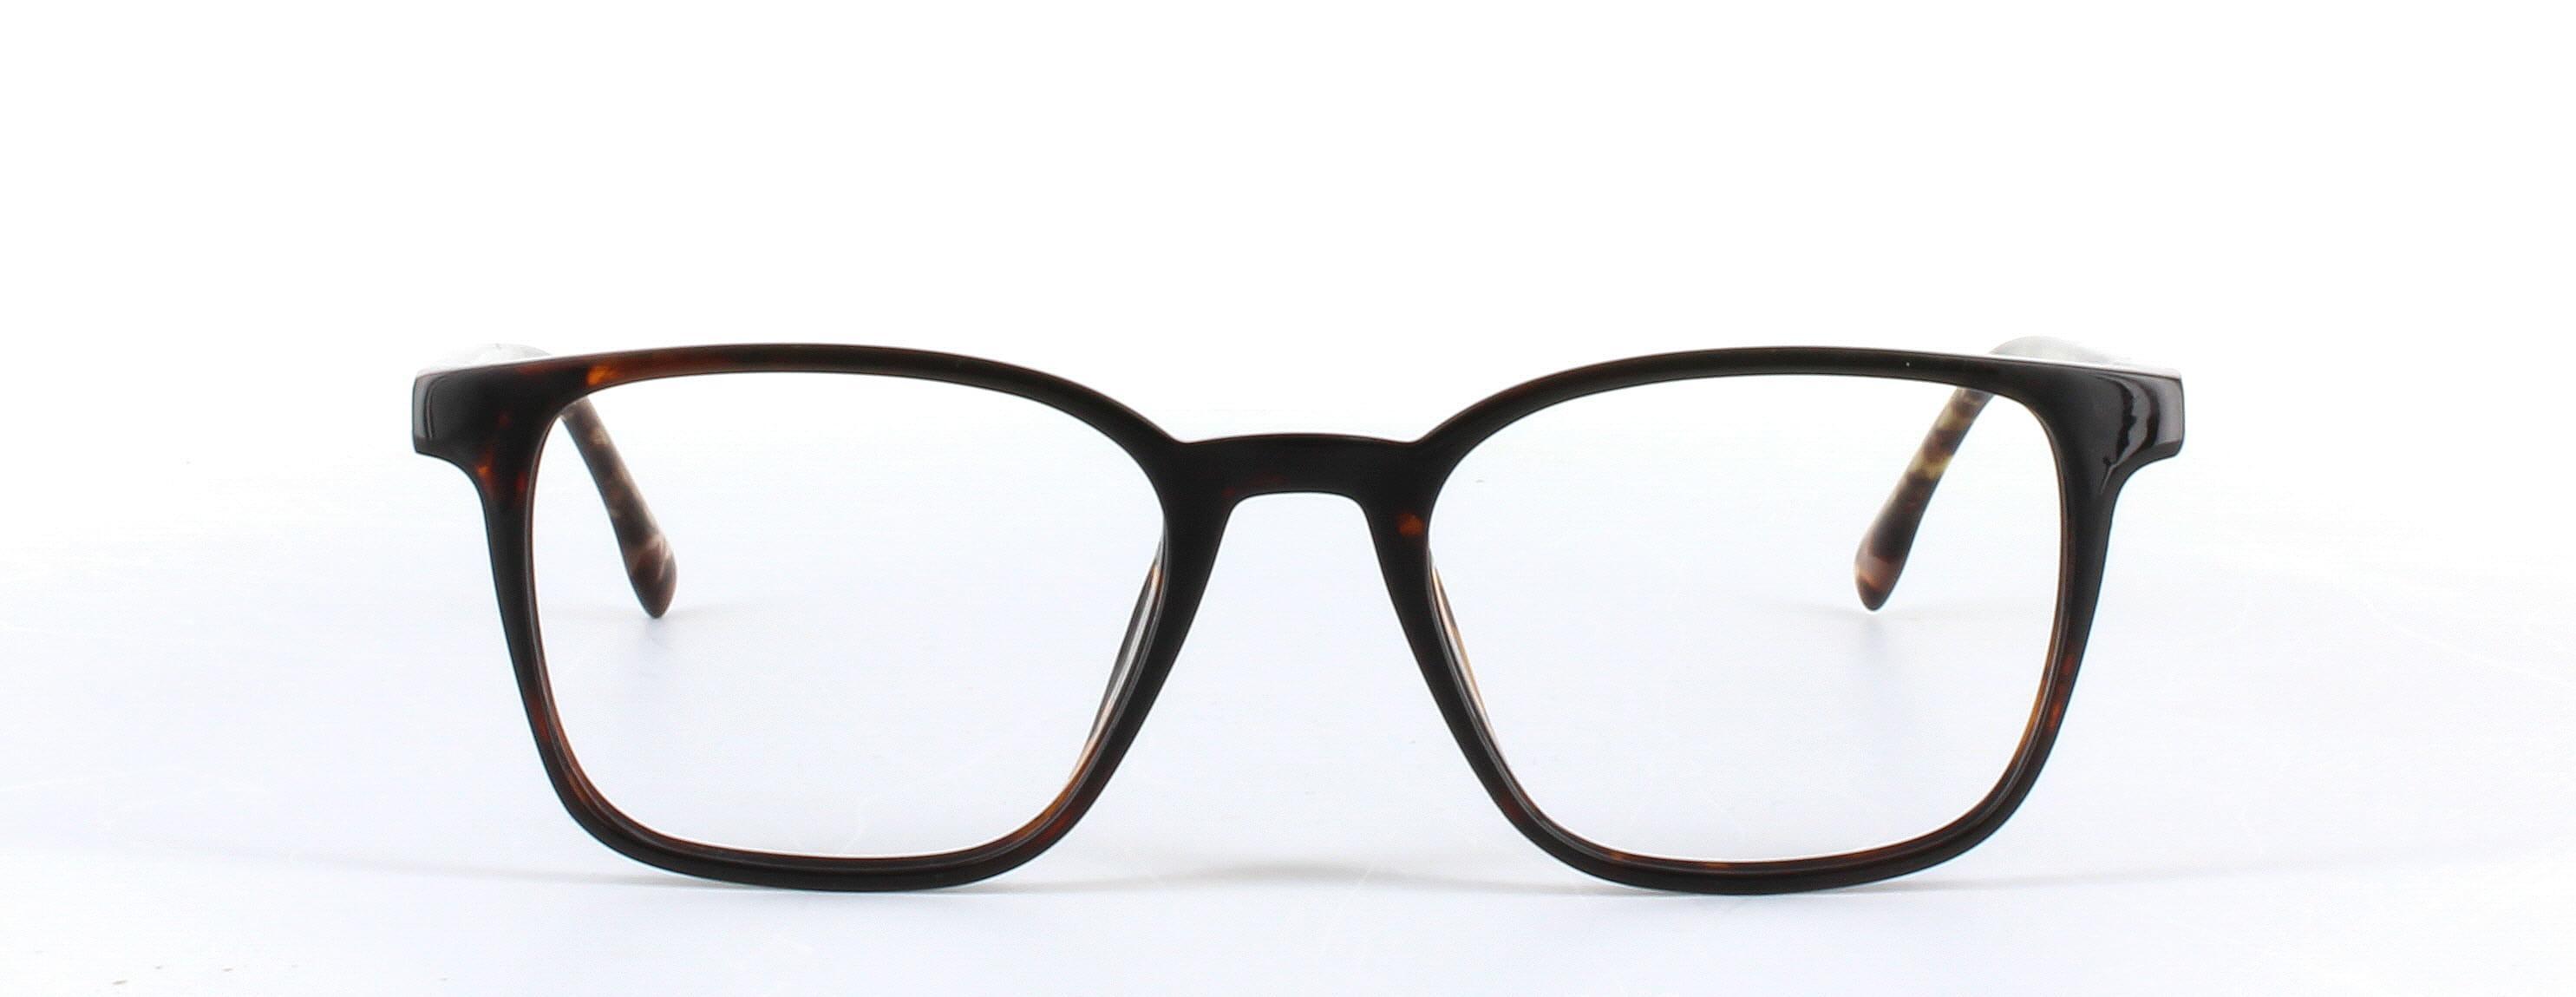 Hodson Brown Full Rim Acetate Glasses - Image View 5